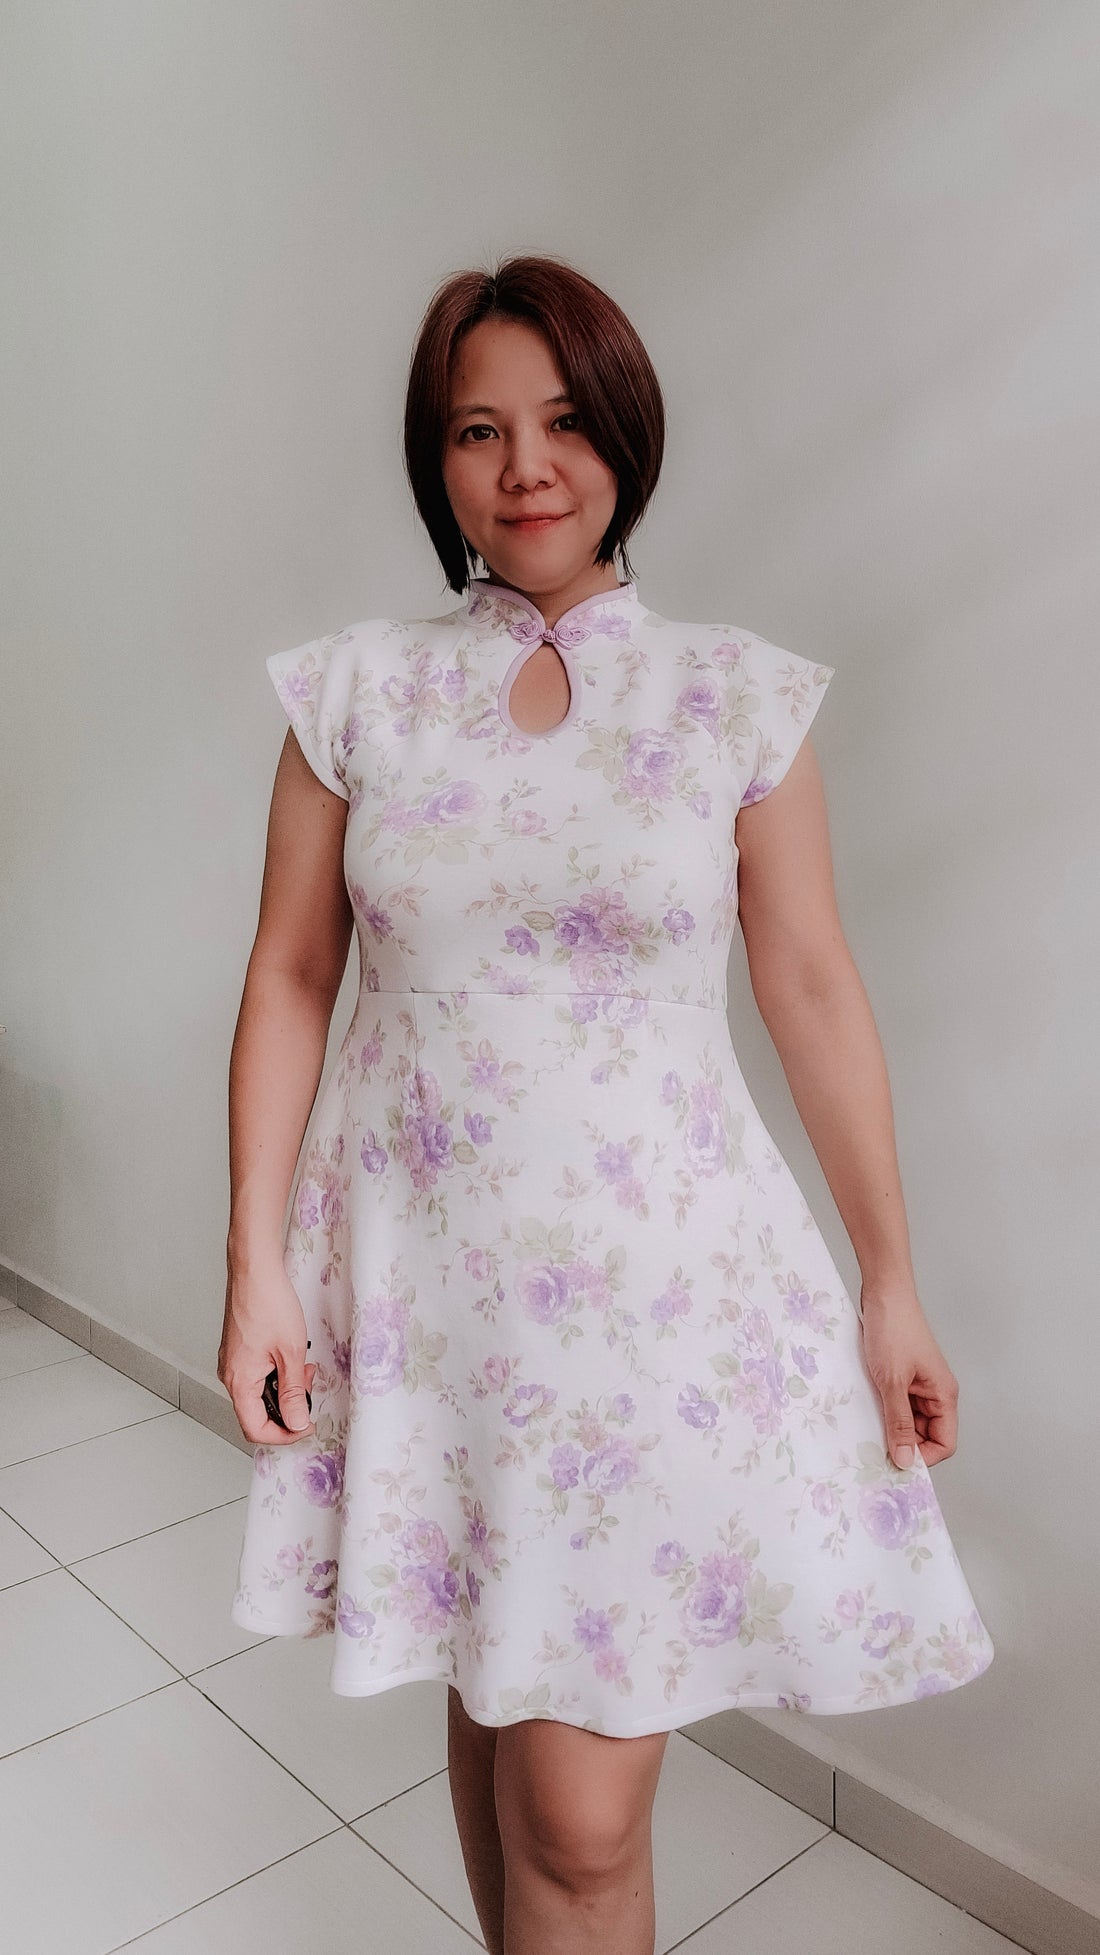 Hong Bao Halter Dress, Top and Skirts